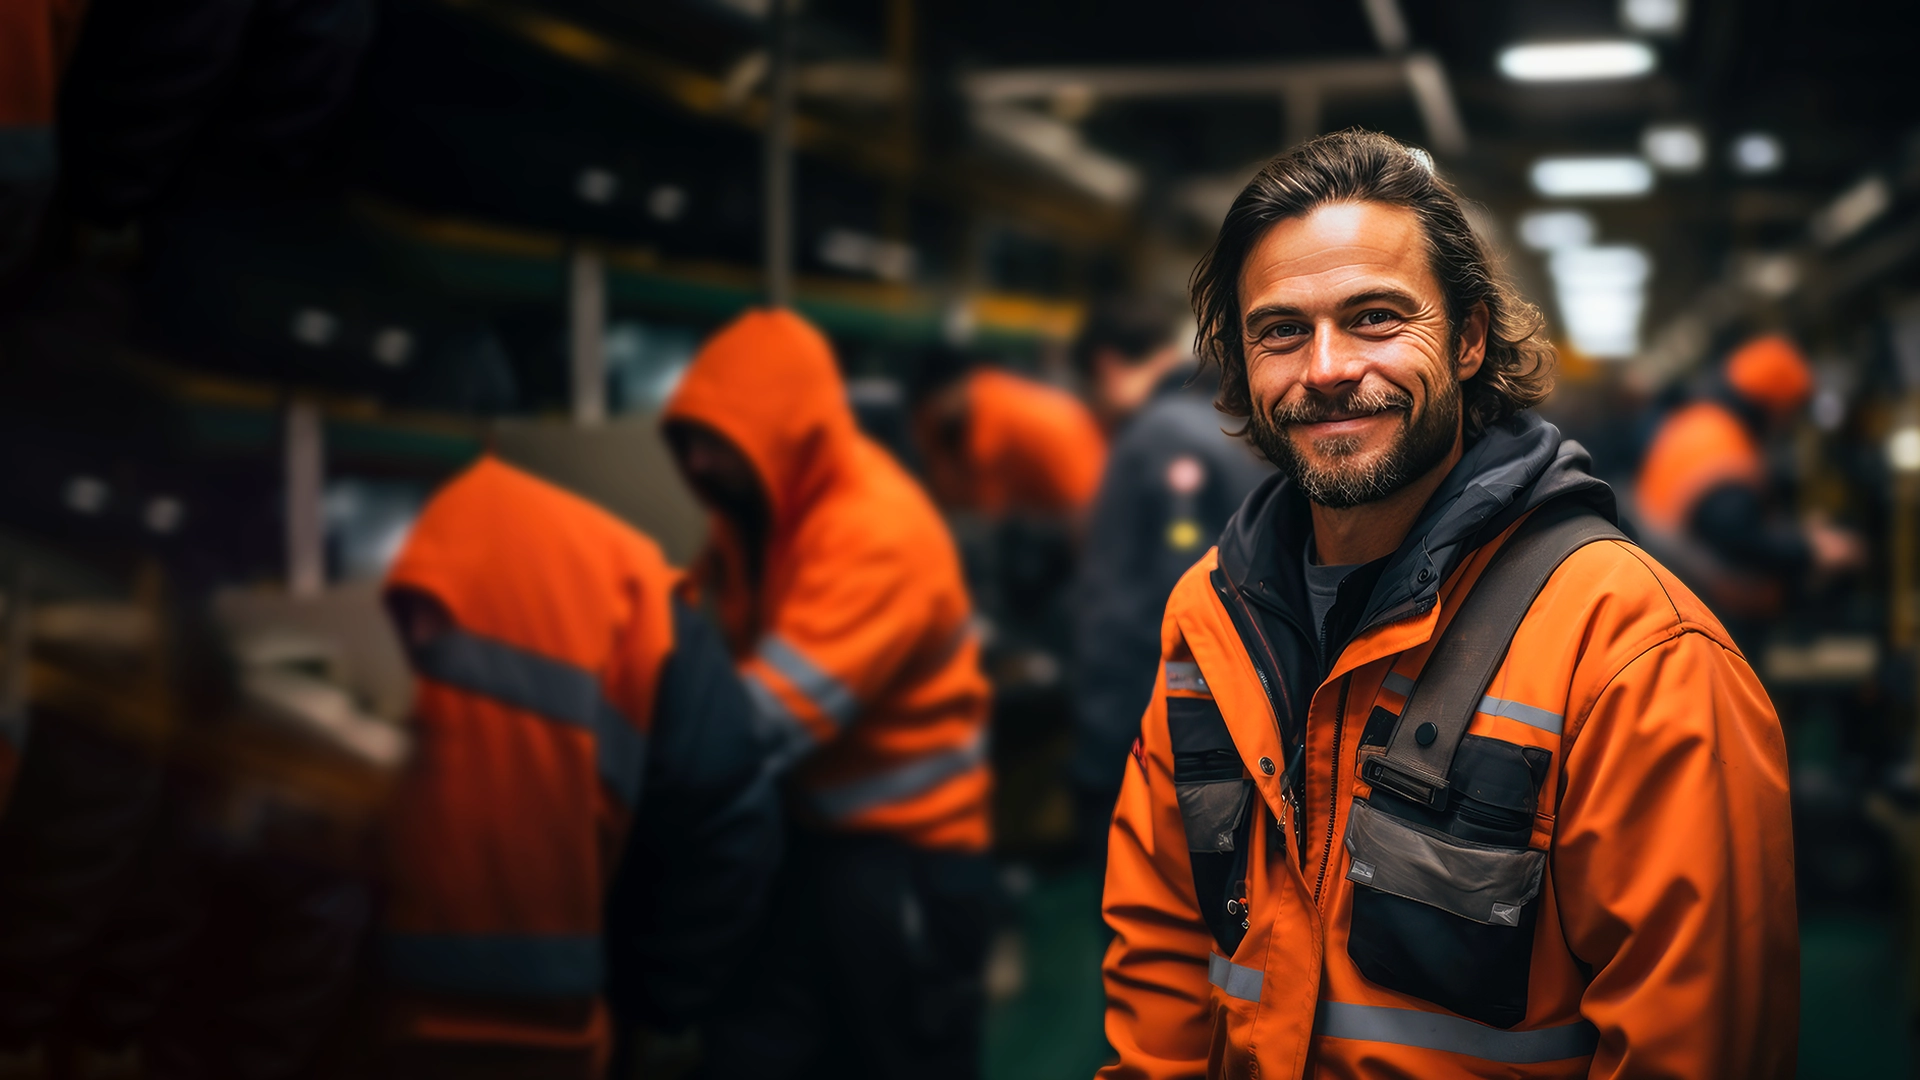 Mechaniker mit orangefarbener Weste in Halle